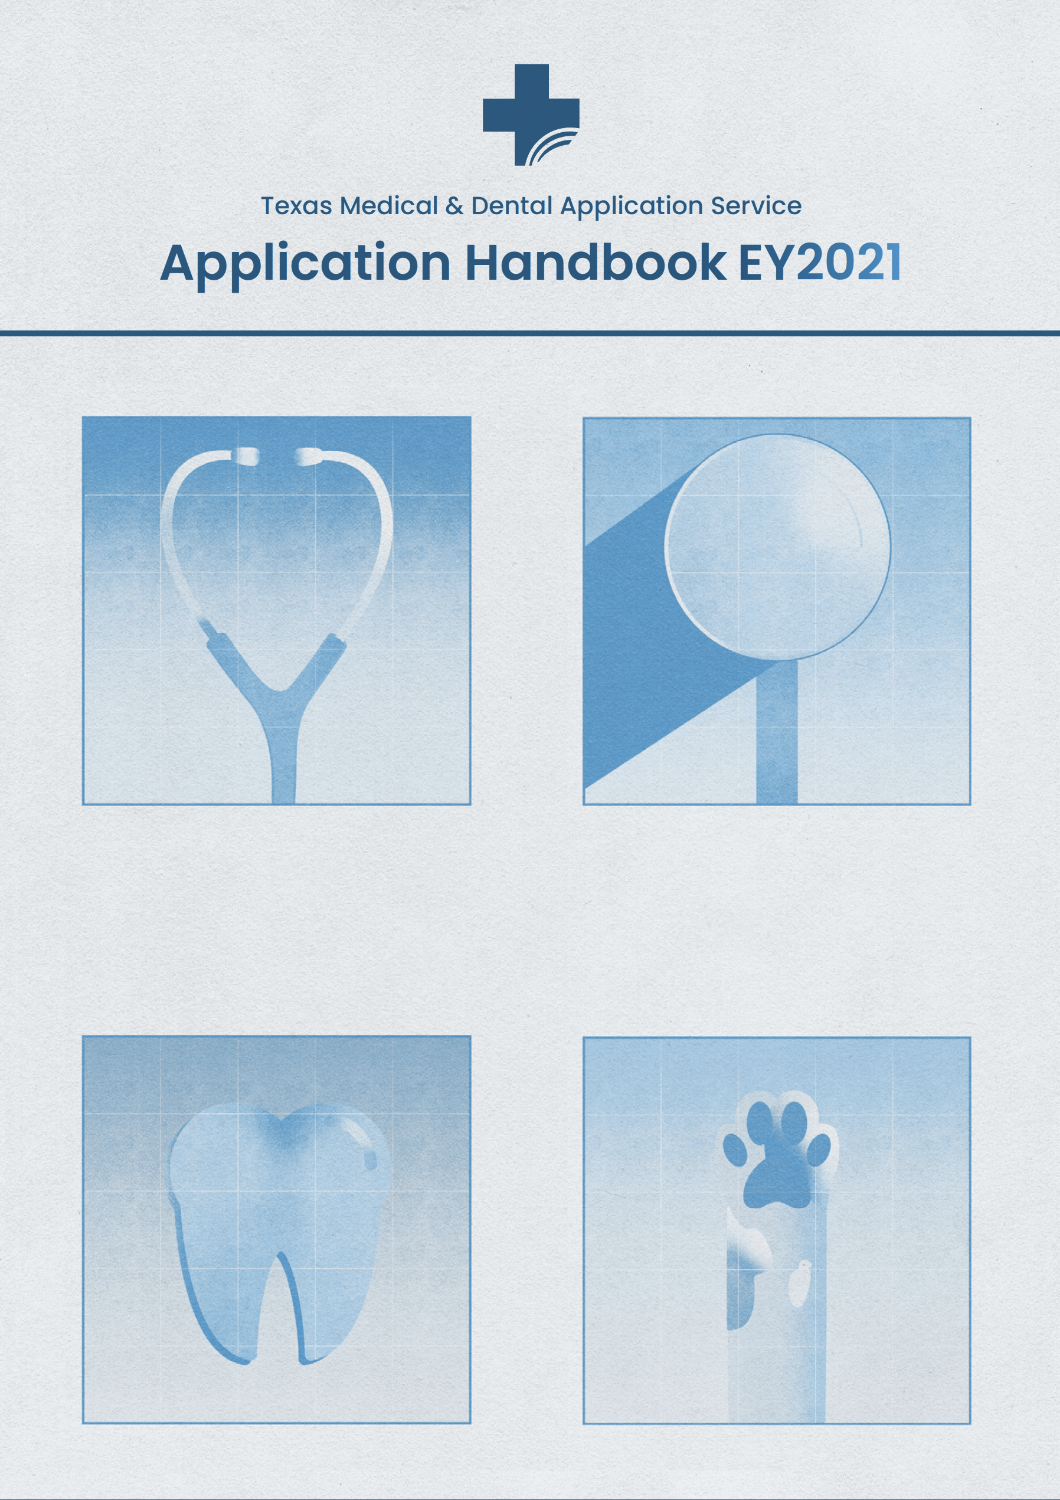 Application Handbook image